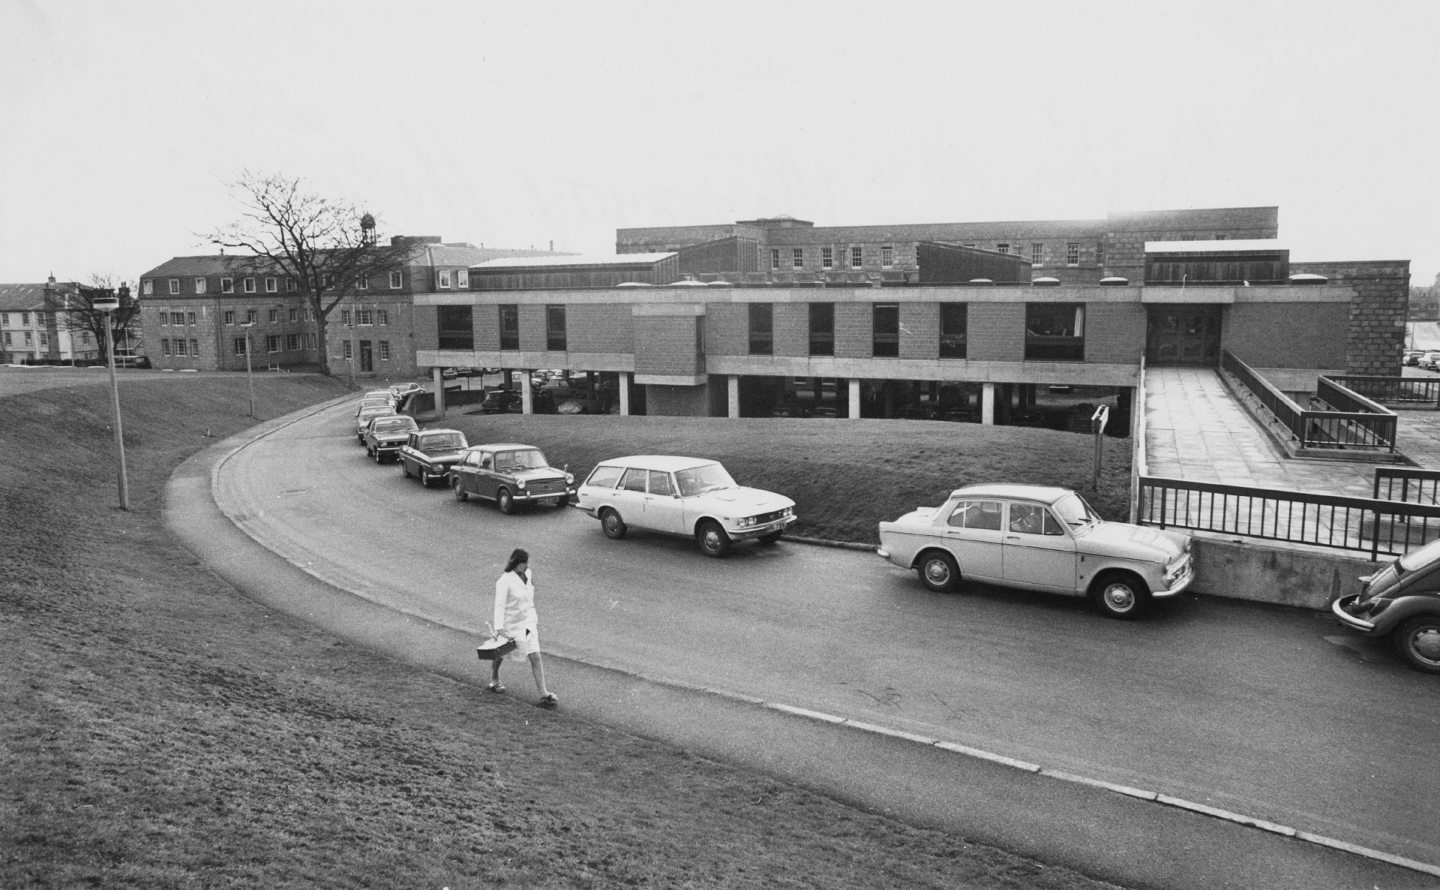 Aberdeen Maternity Hospital in December 1973